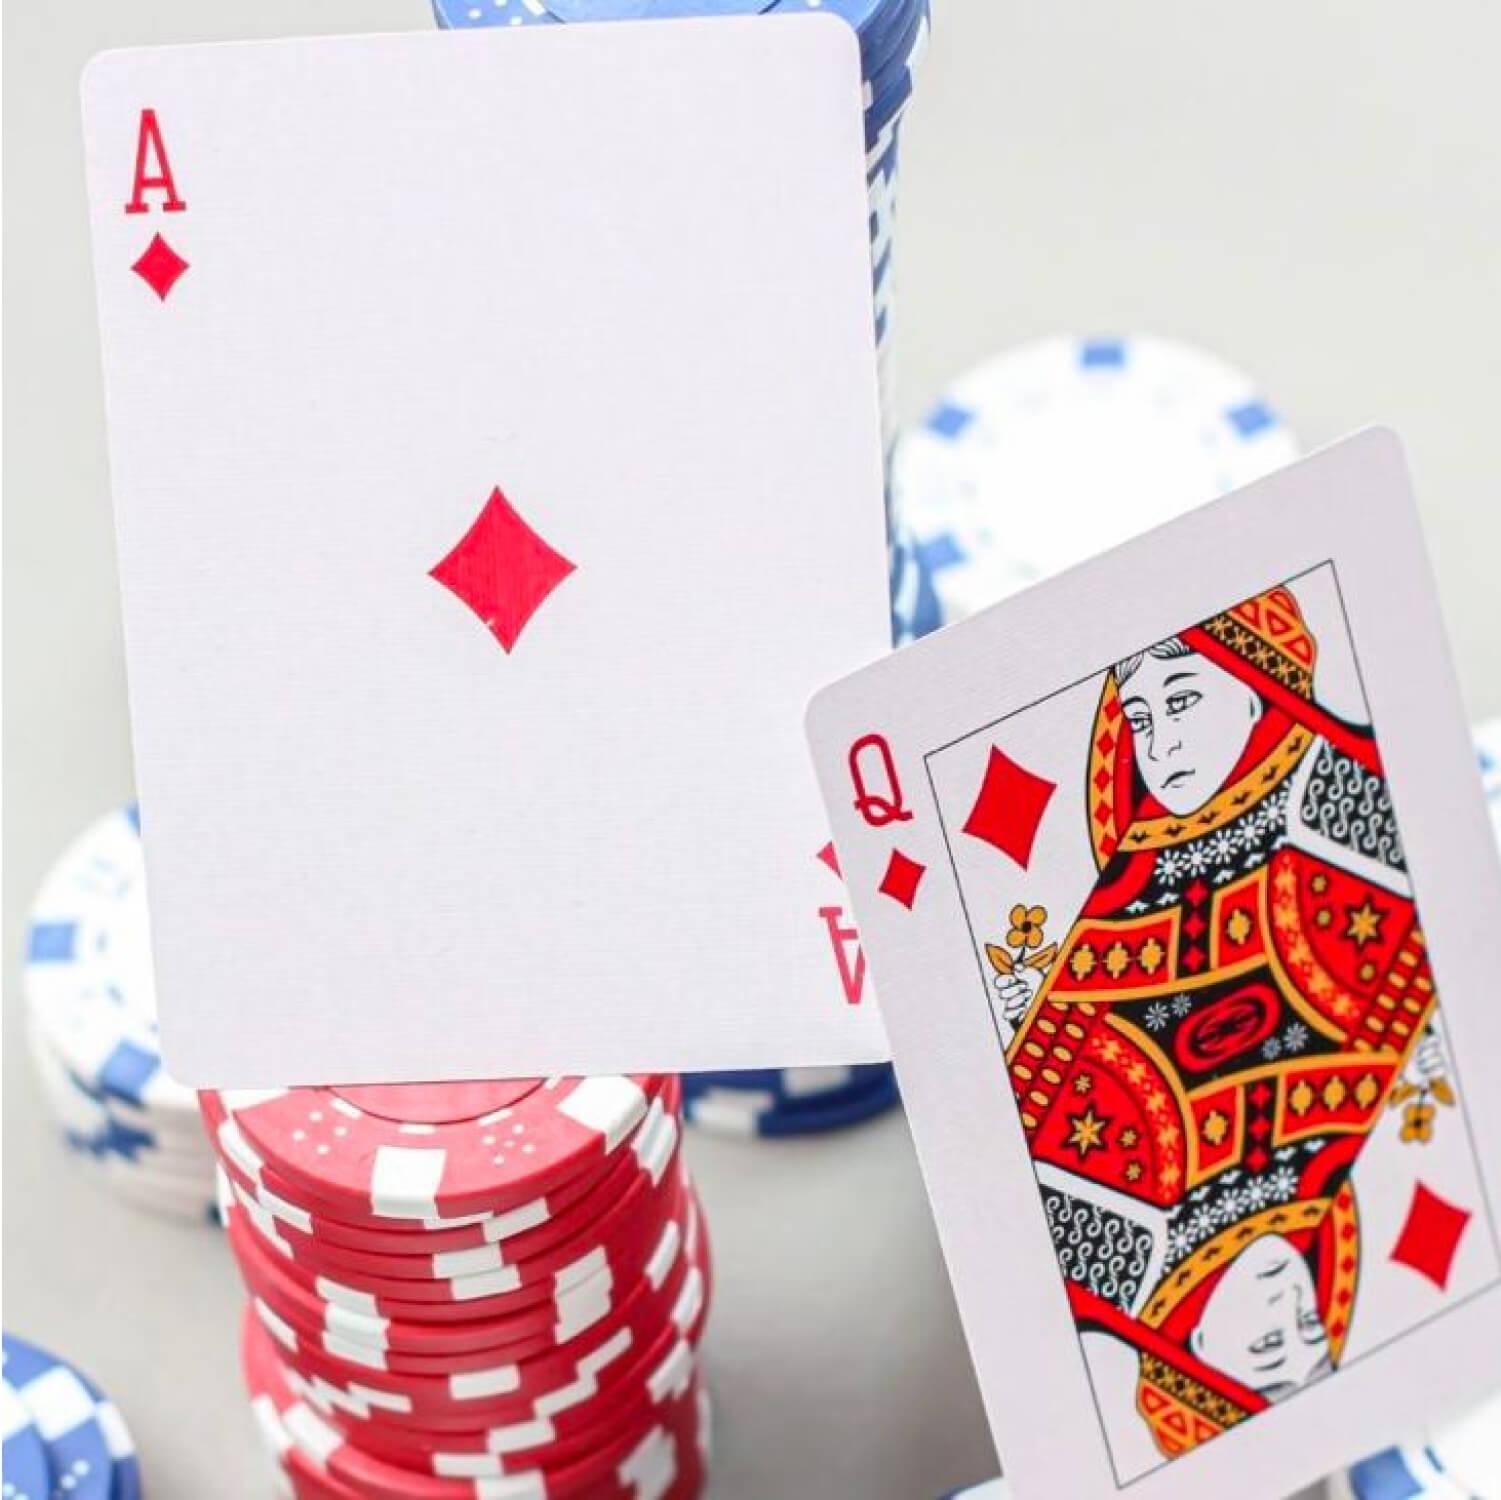 Identity Solutions for Gambling & Online Casinos